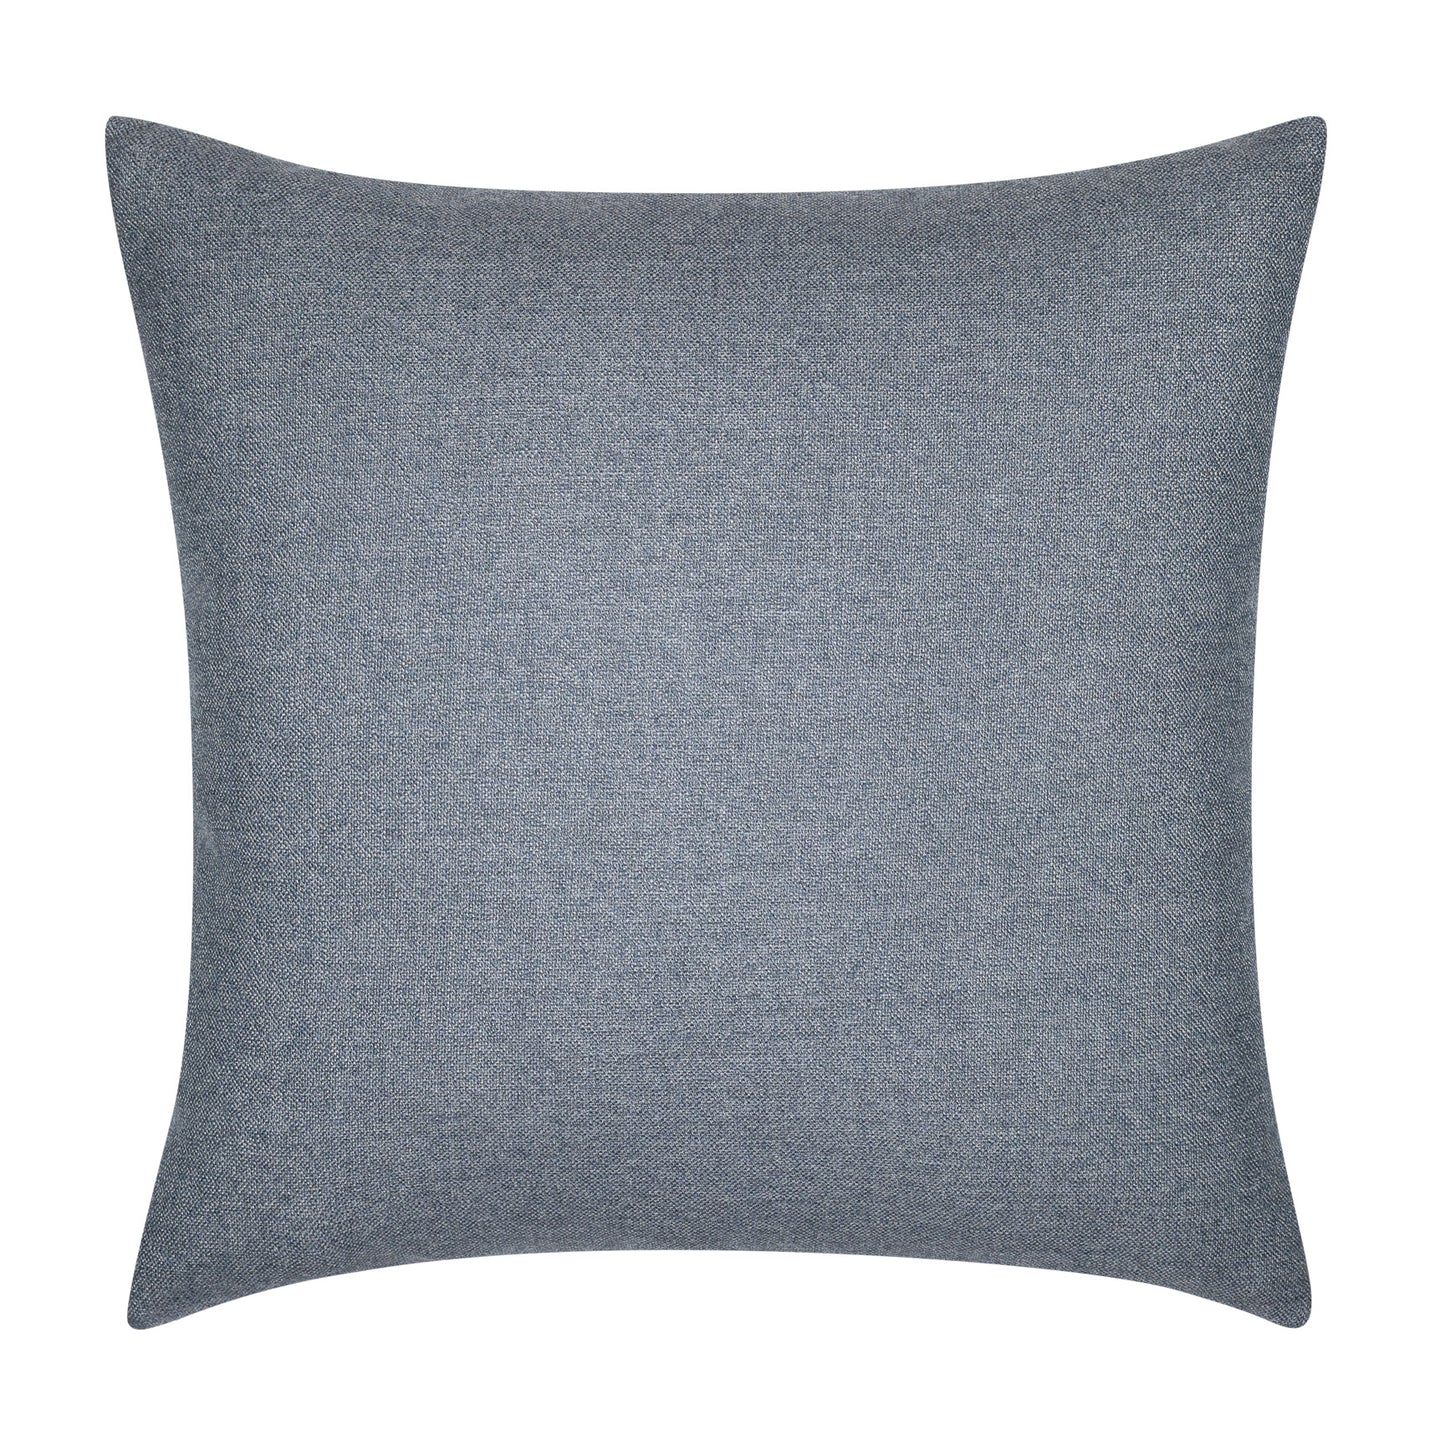 20" Square Elaine Smith Pillow  Solid Denim